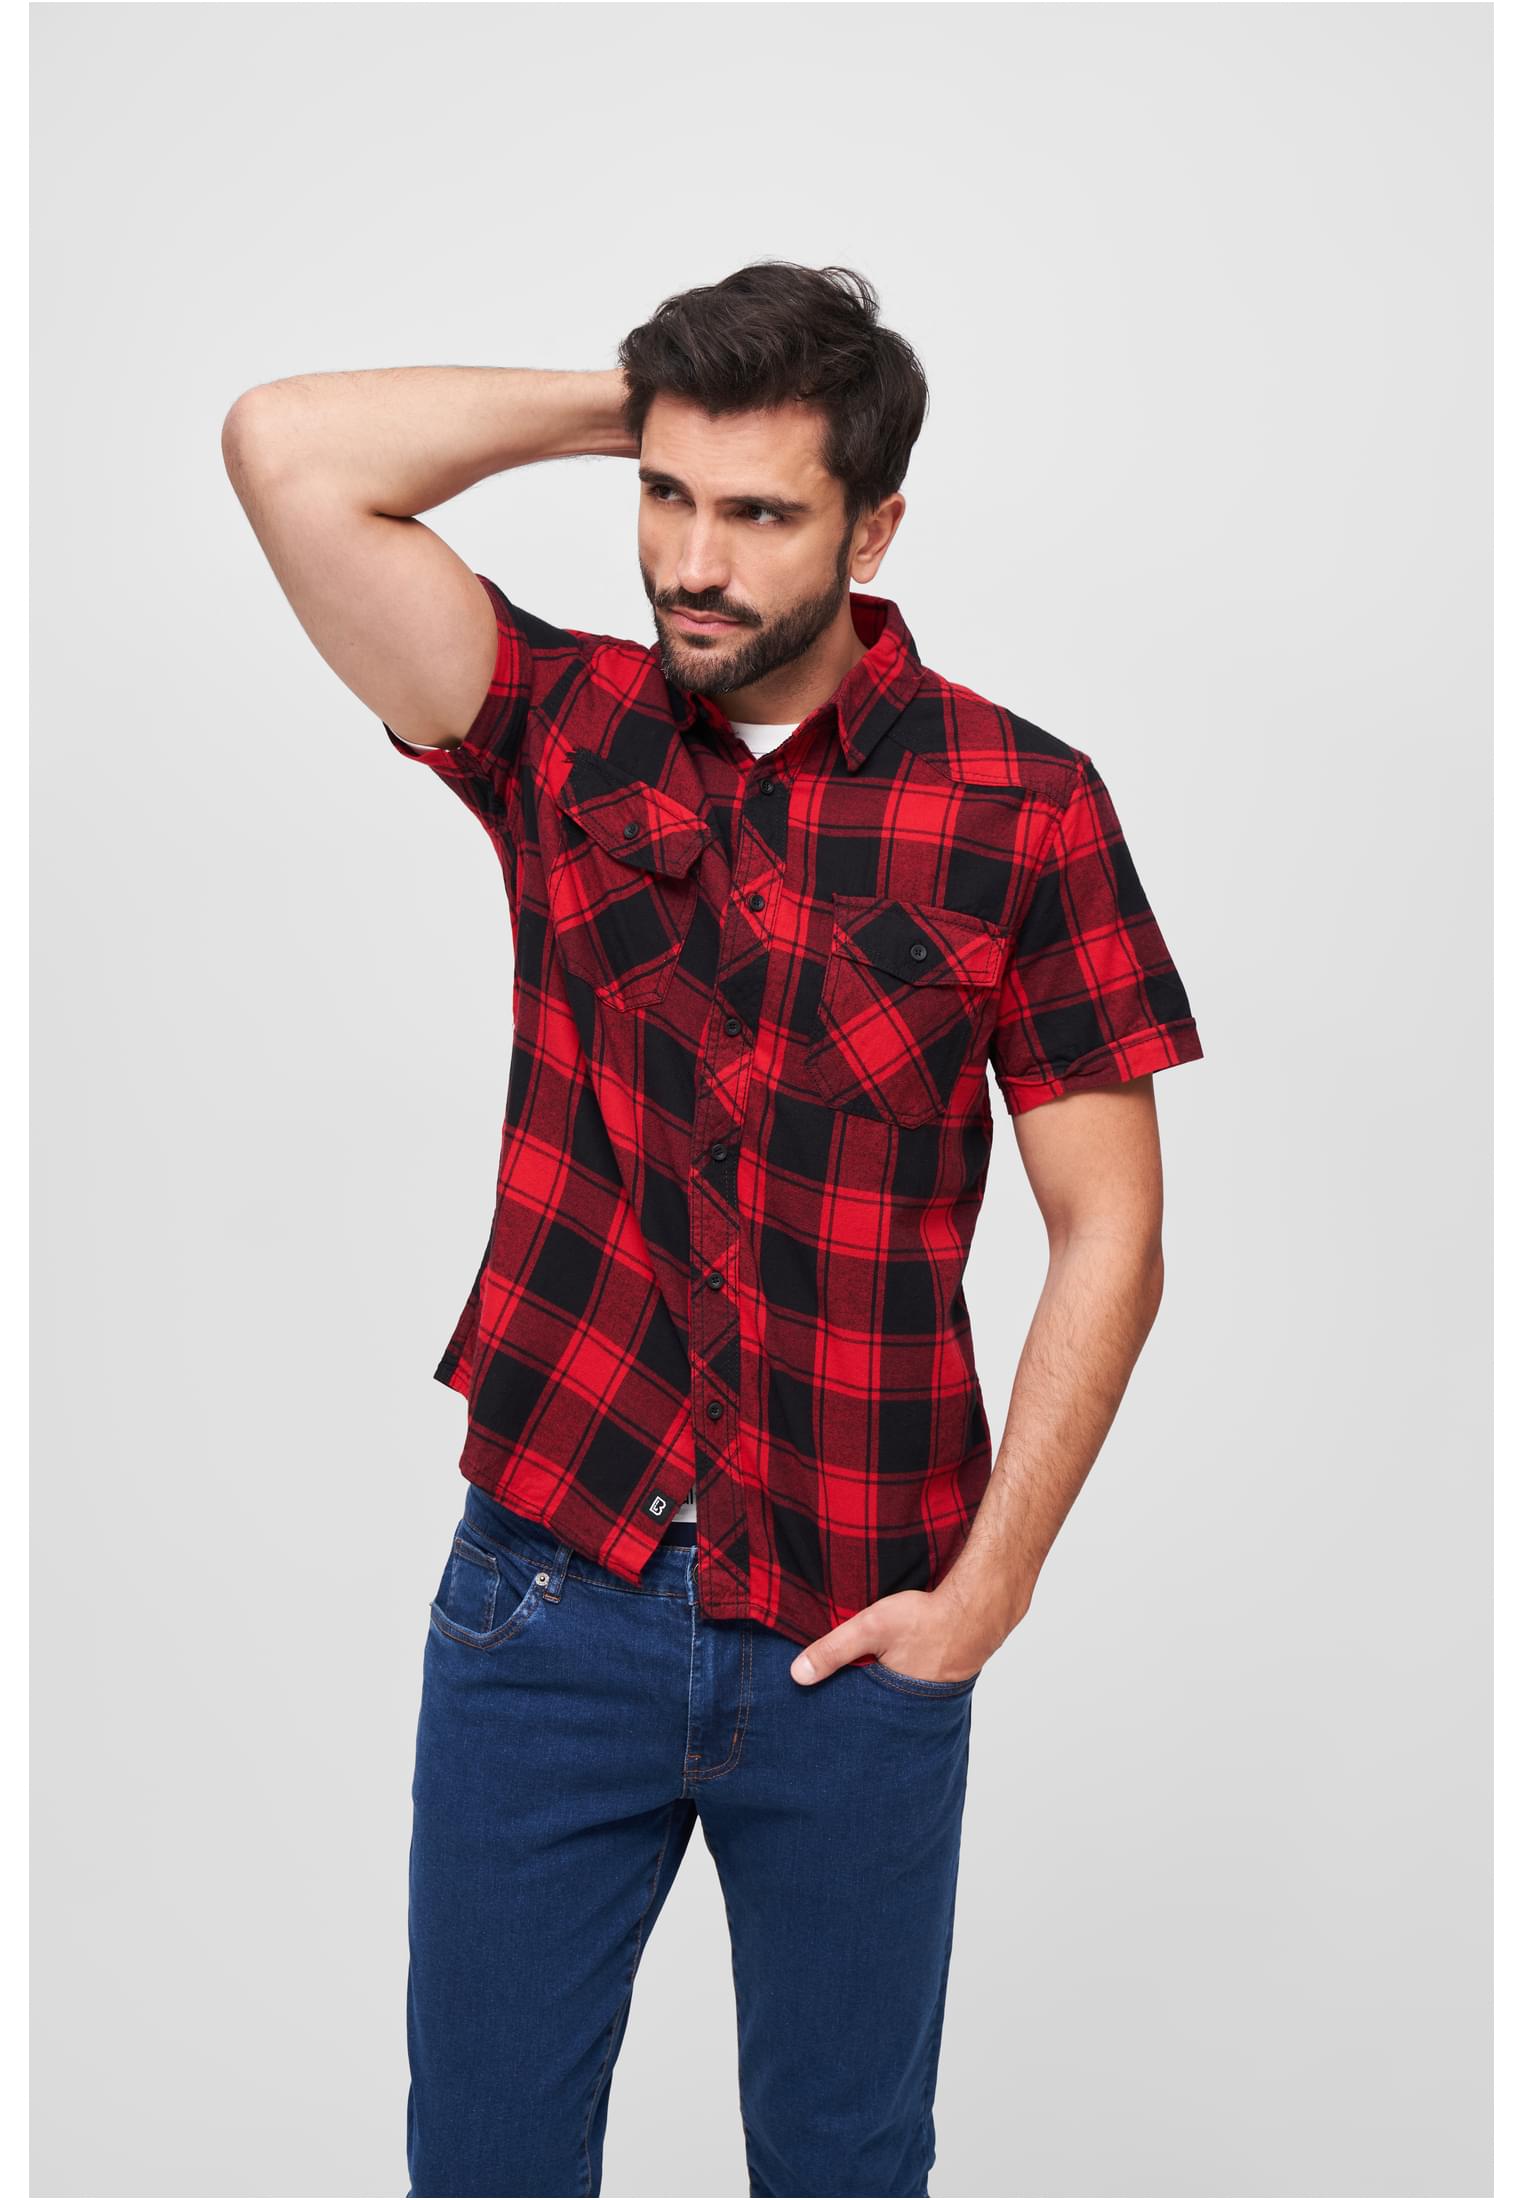 Half-sleeved Shirt Red/black